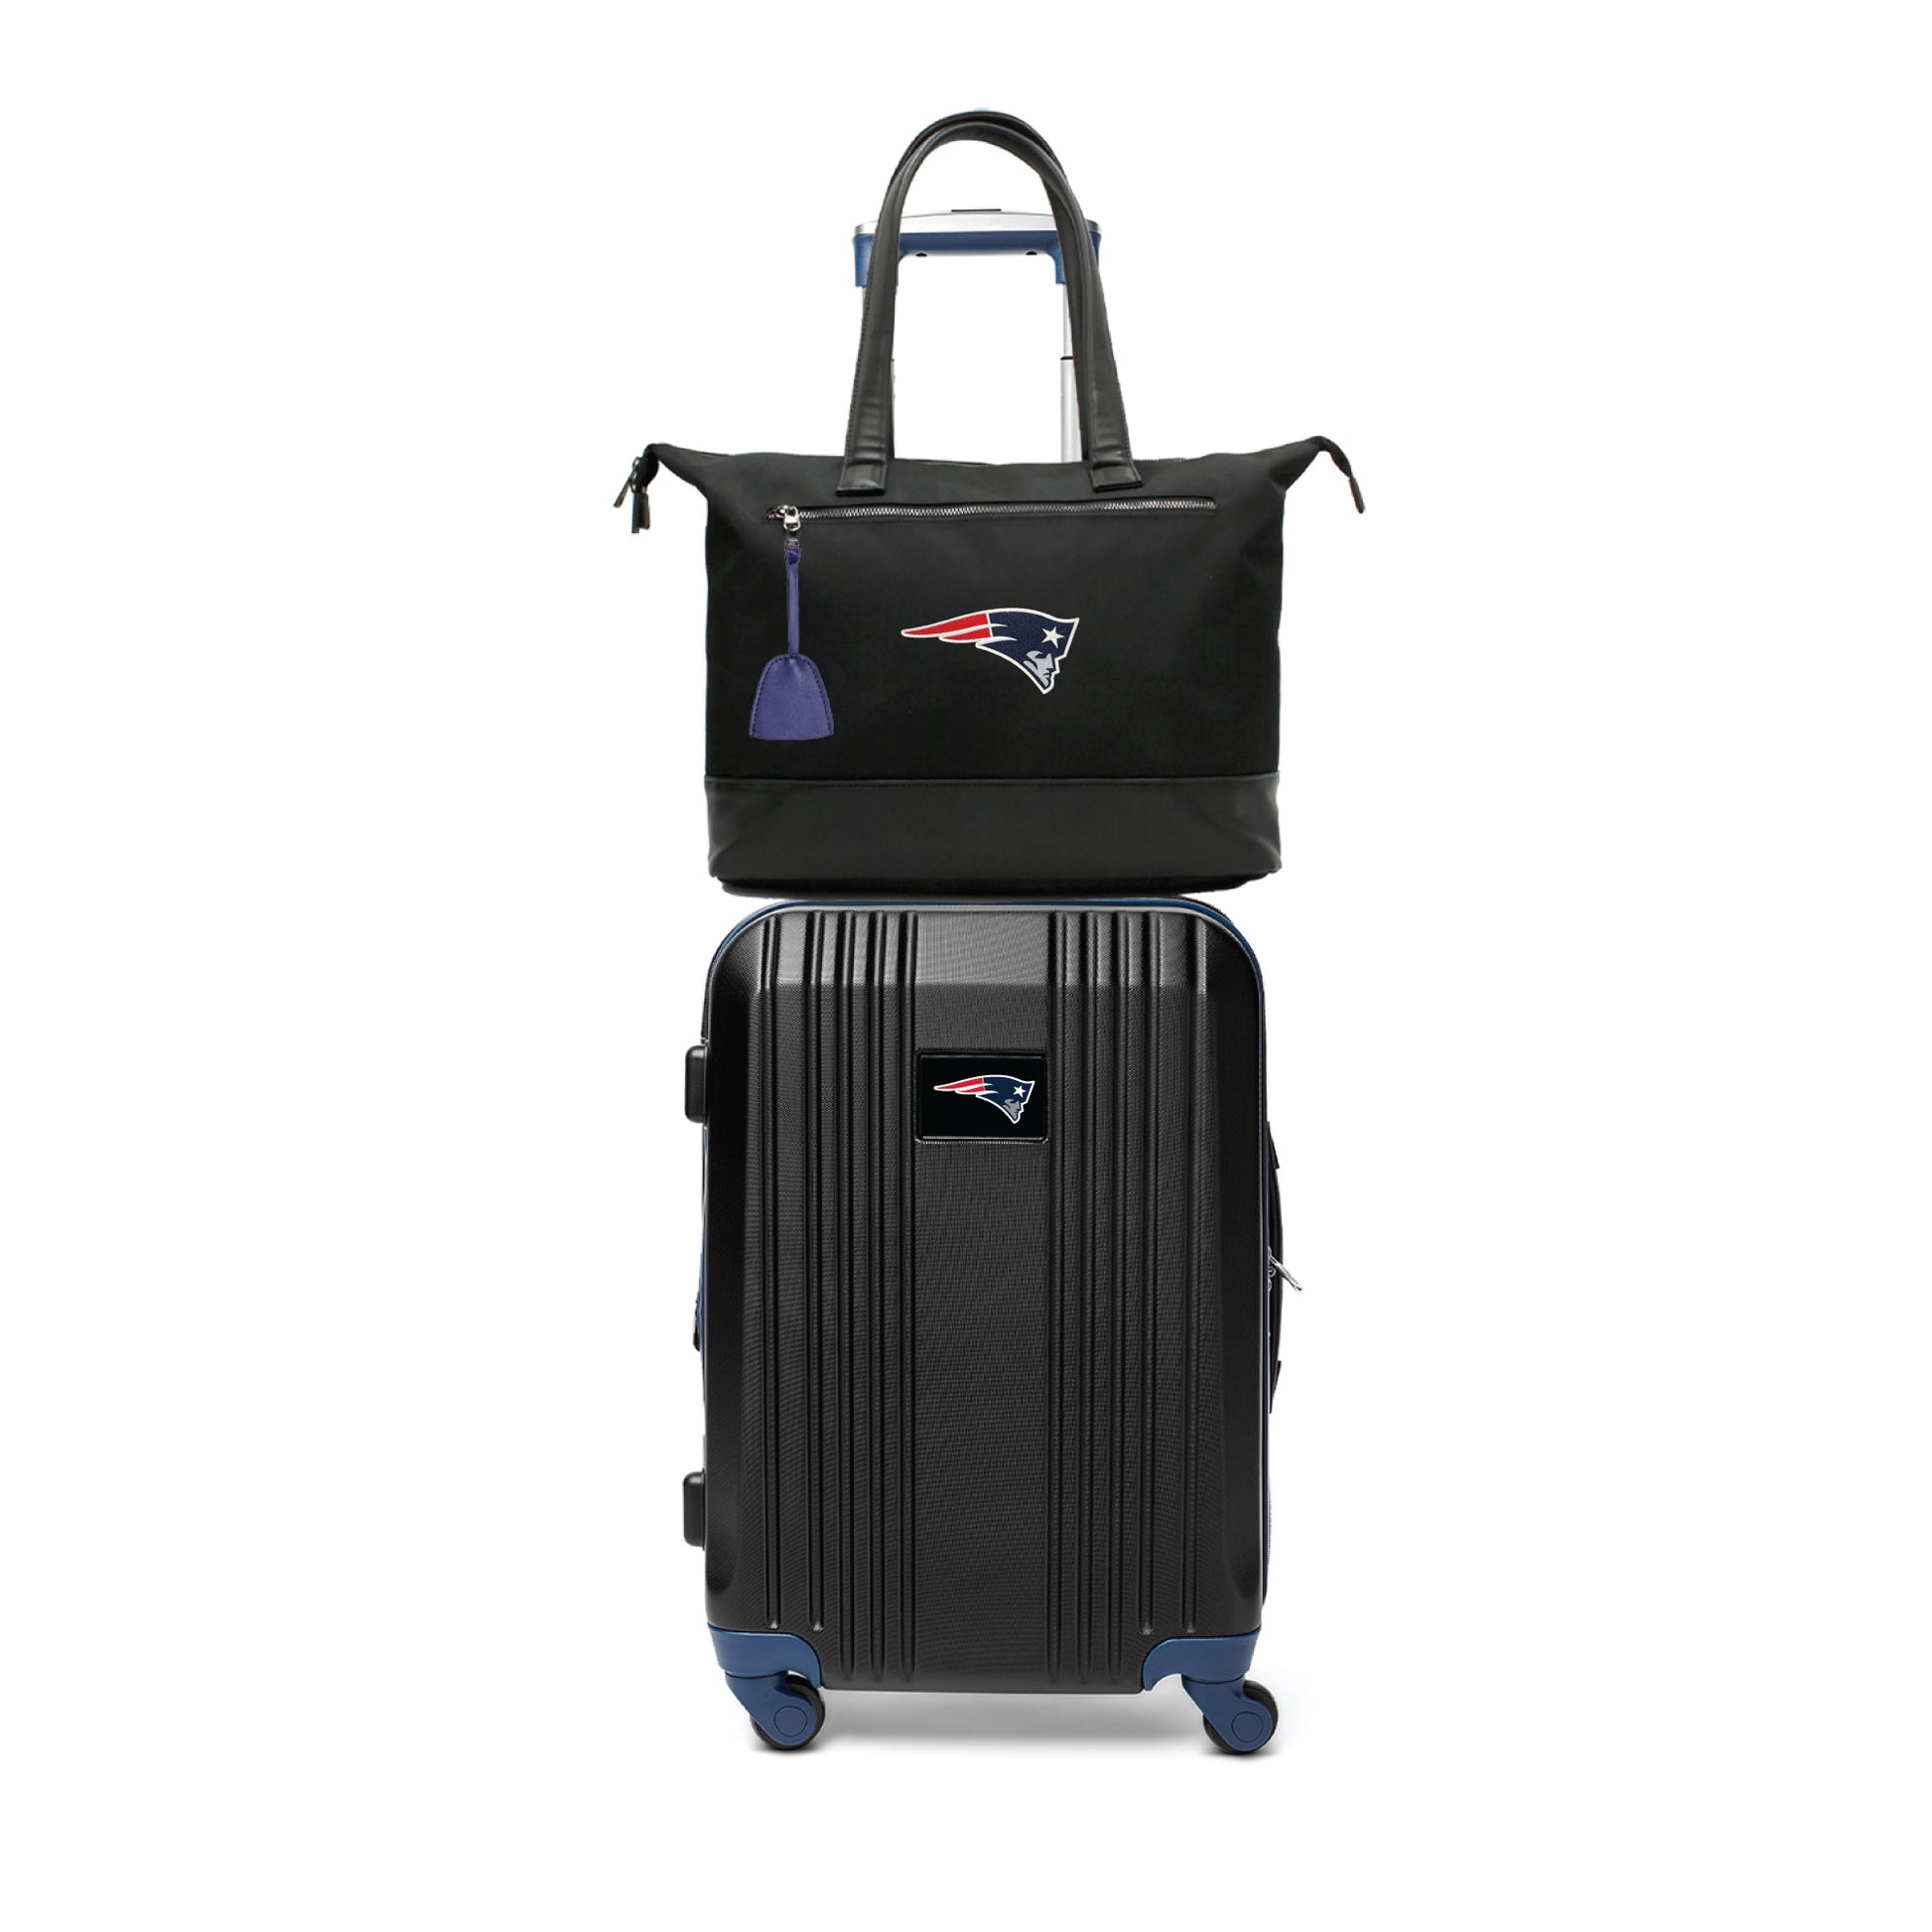 New England Patriots Premium Laptop Tote Bag and Luggage Set